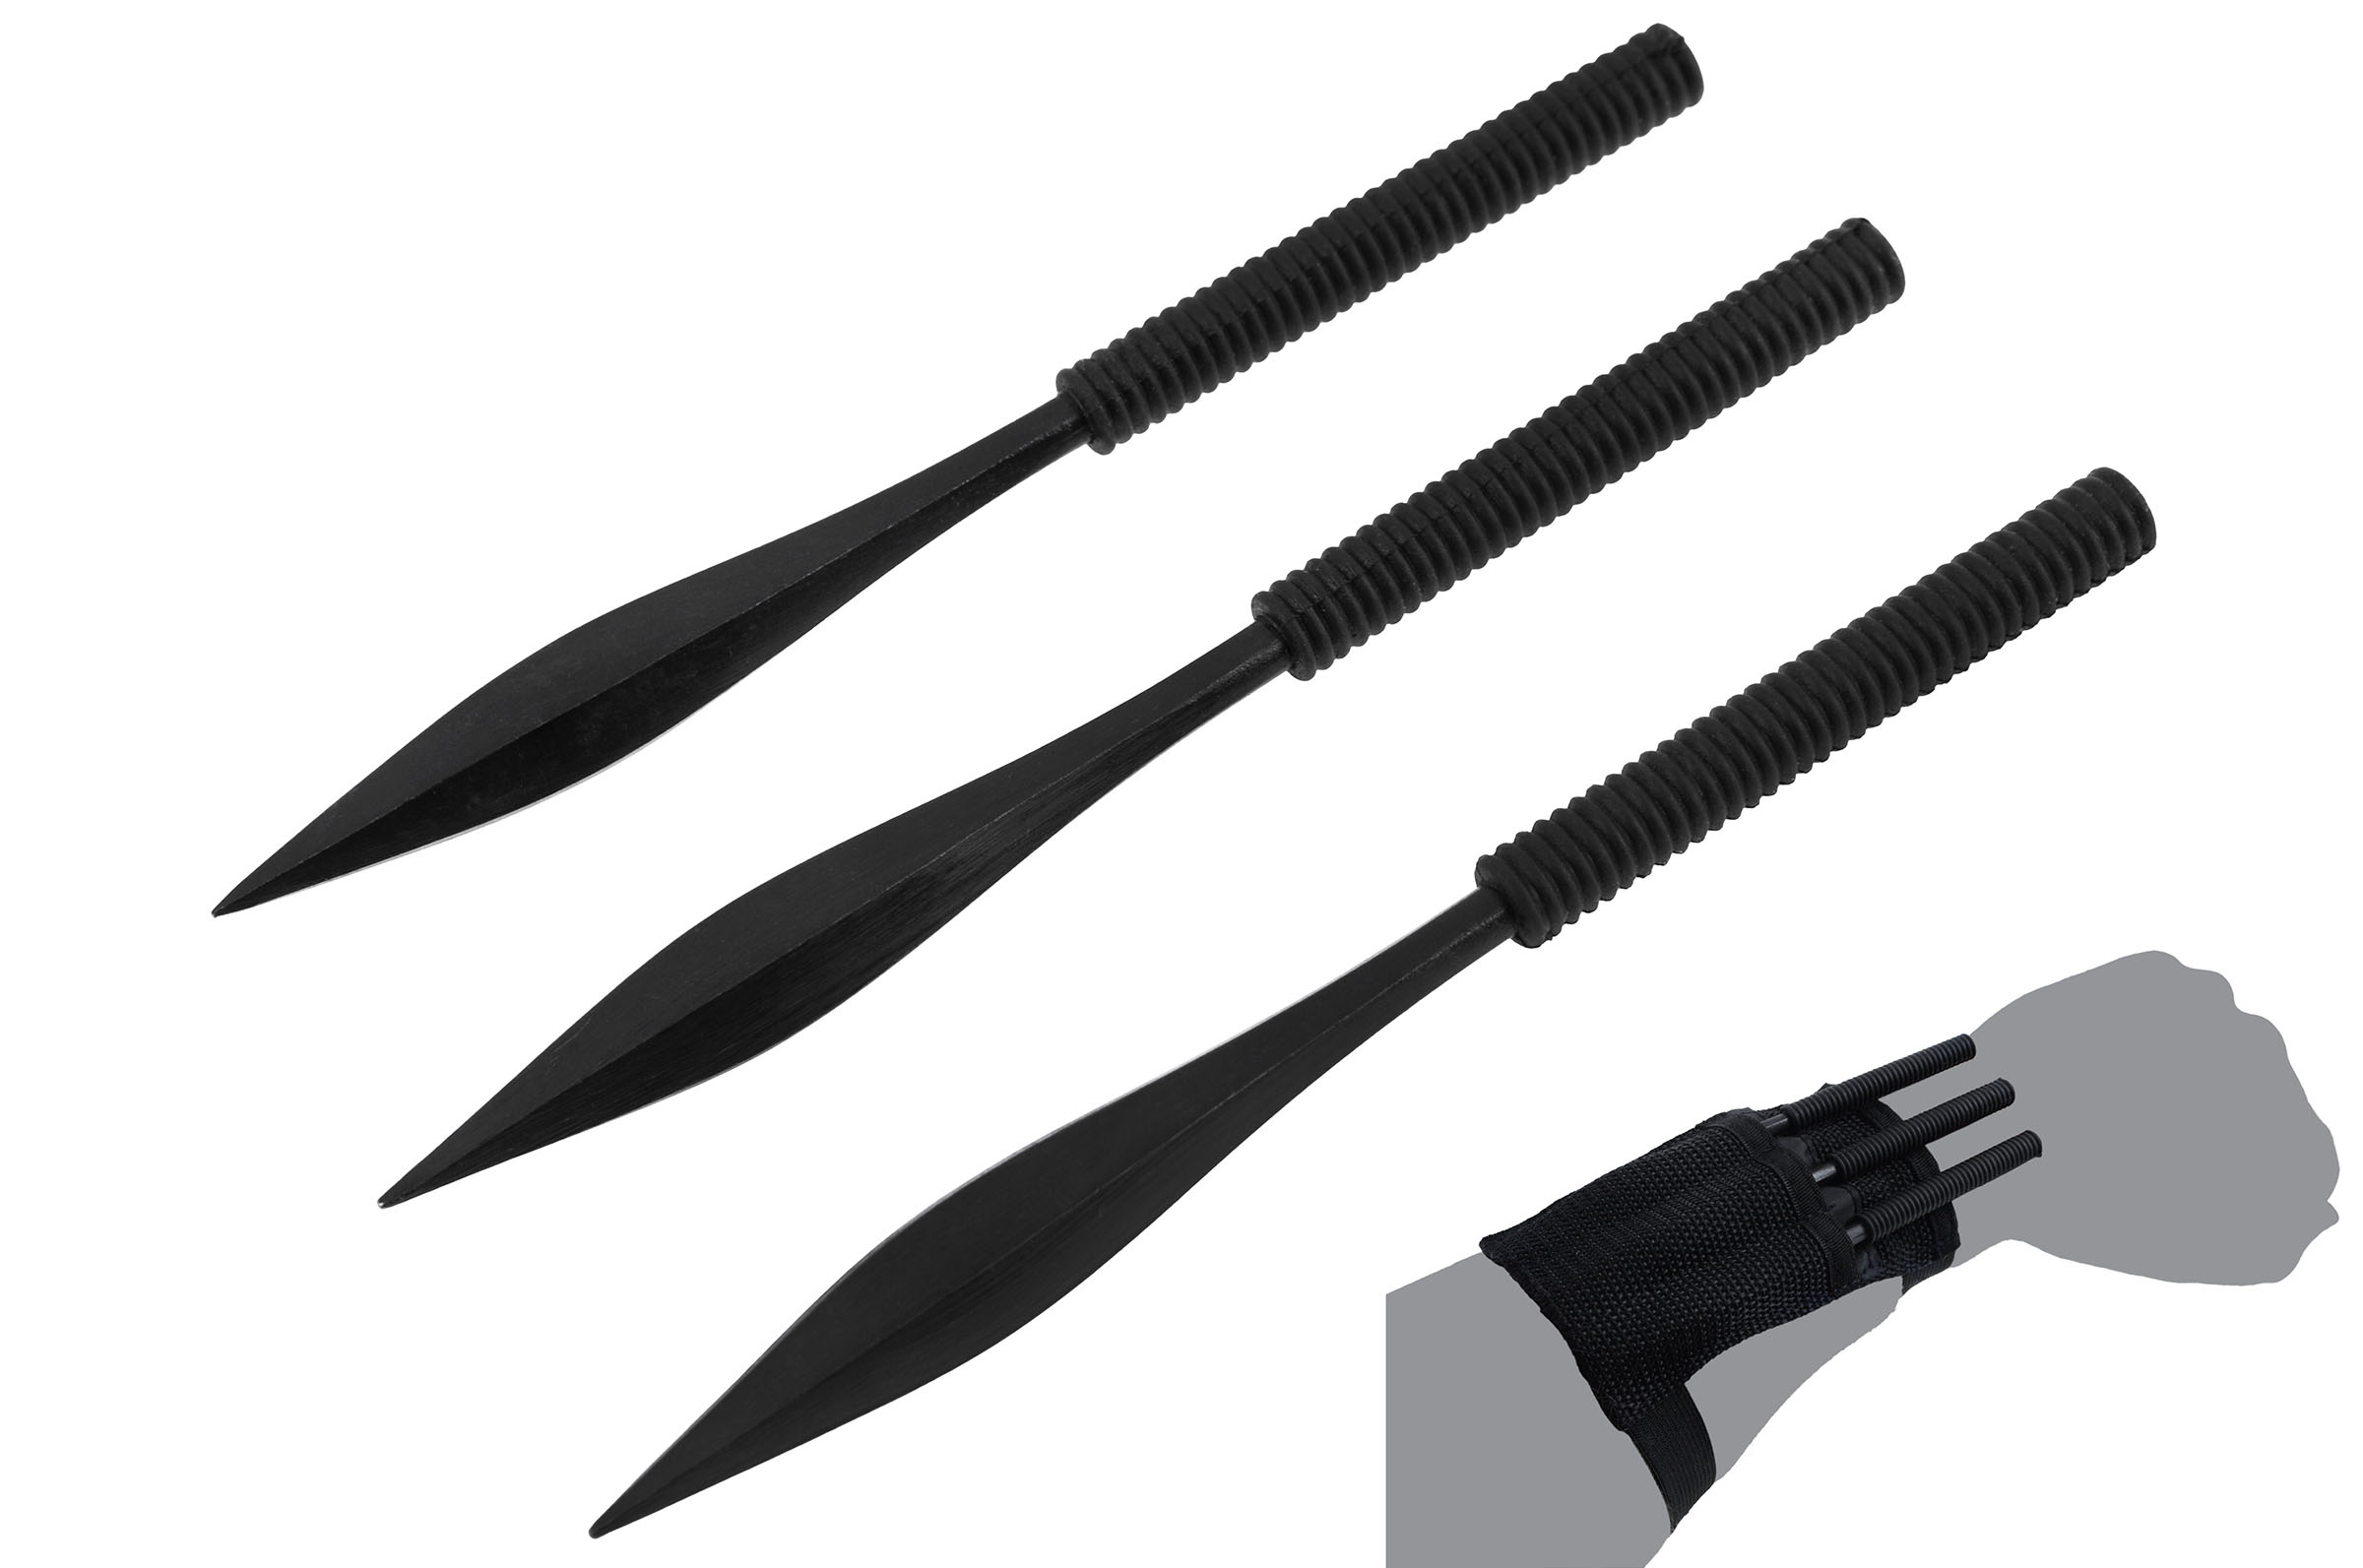 Ninja Weapons Accessories Kit